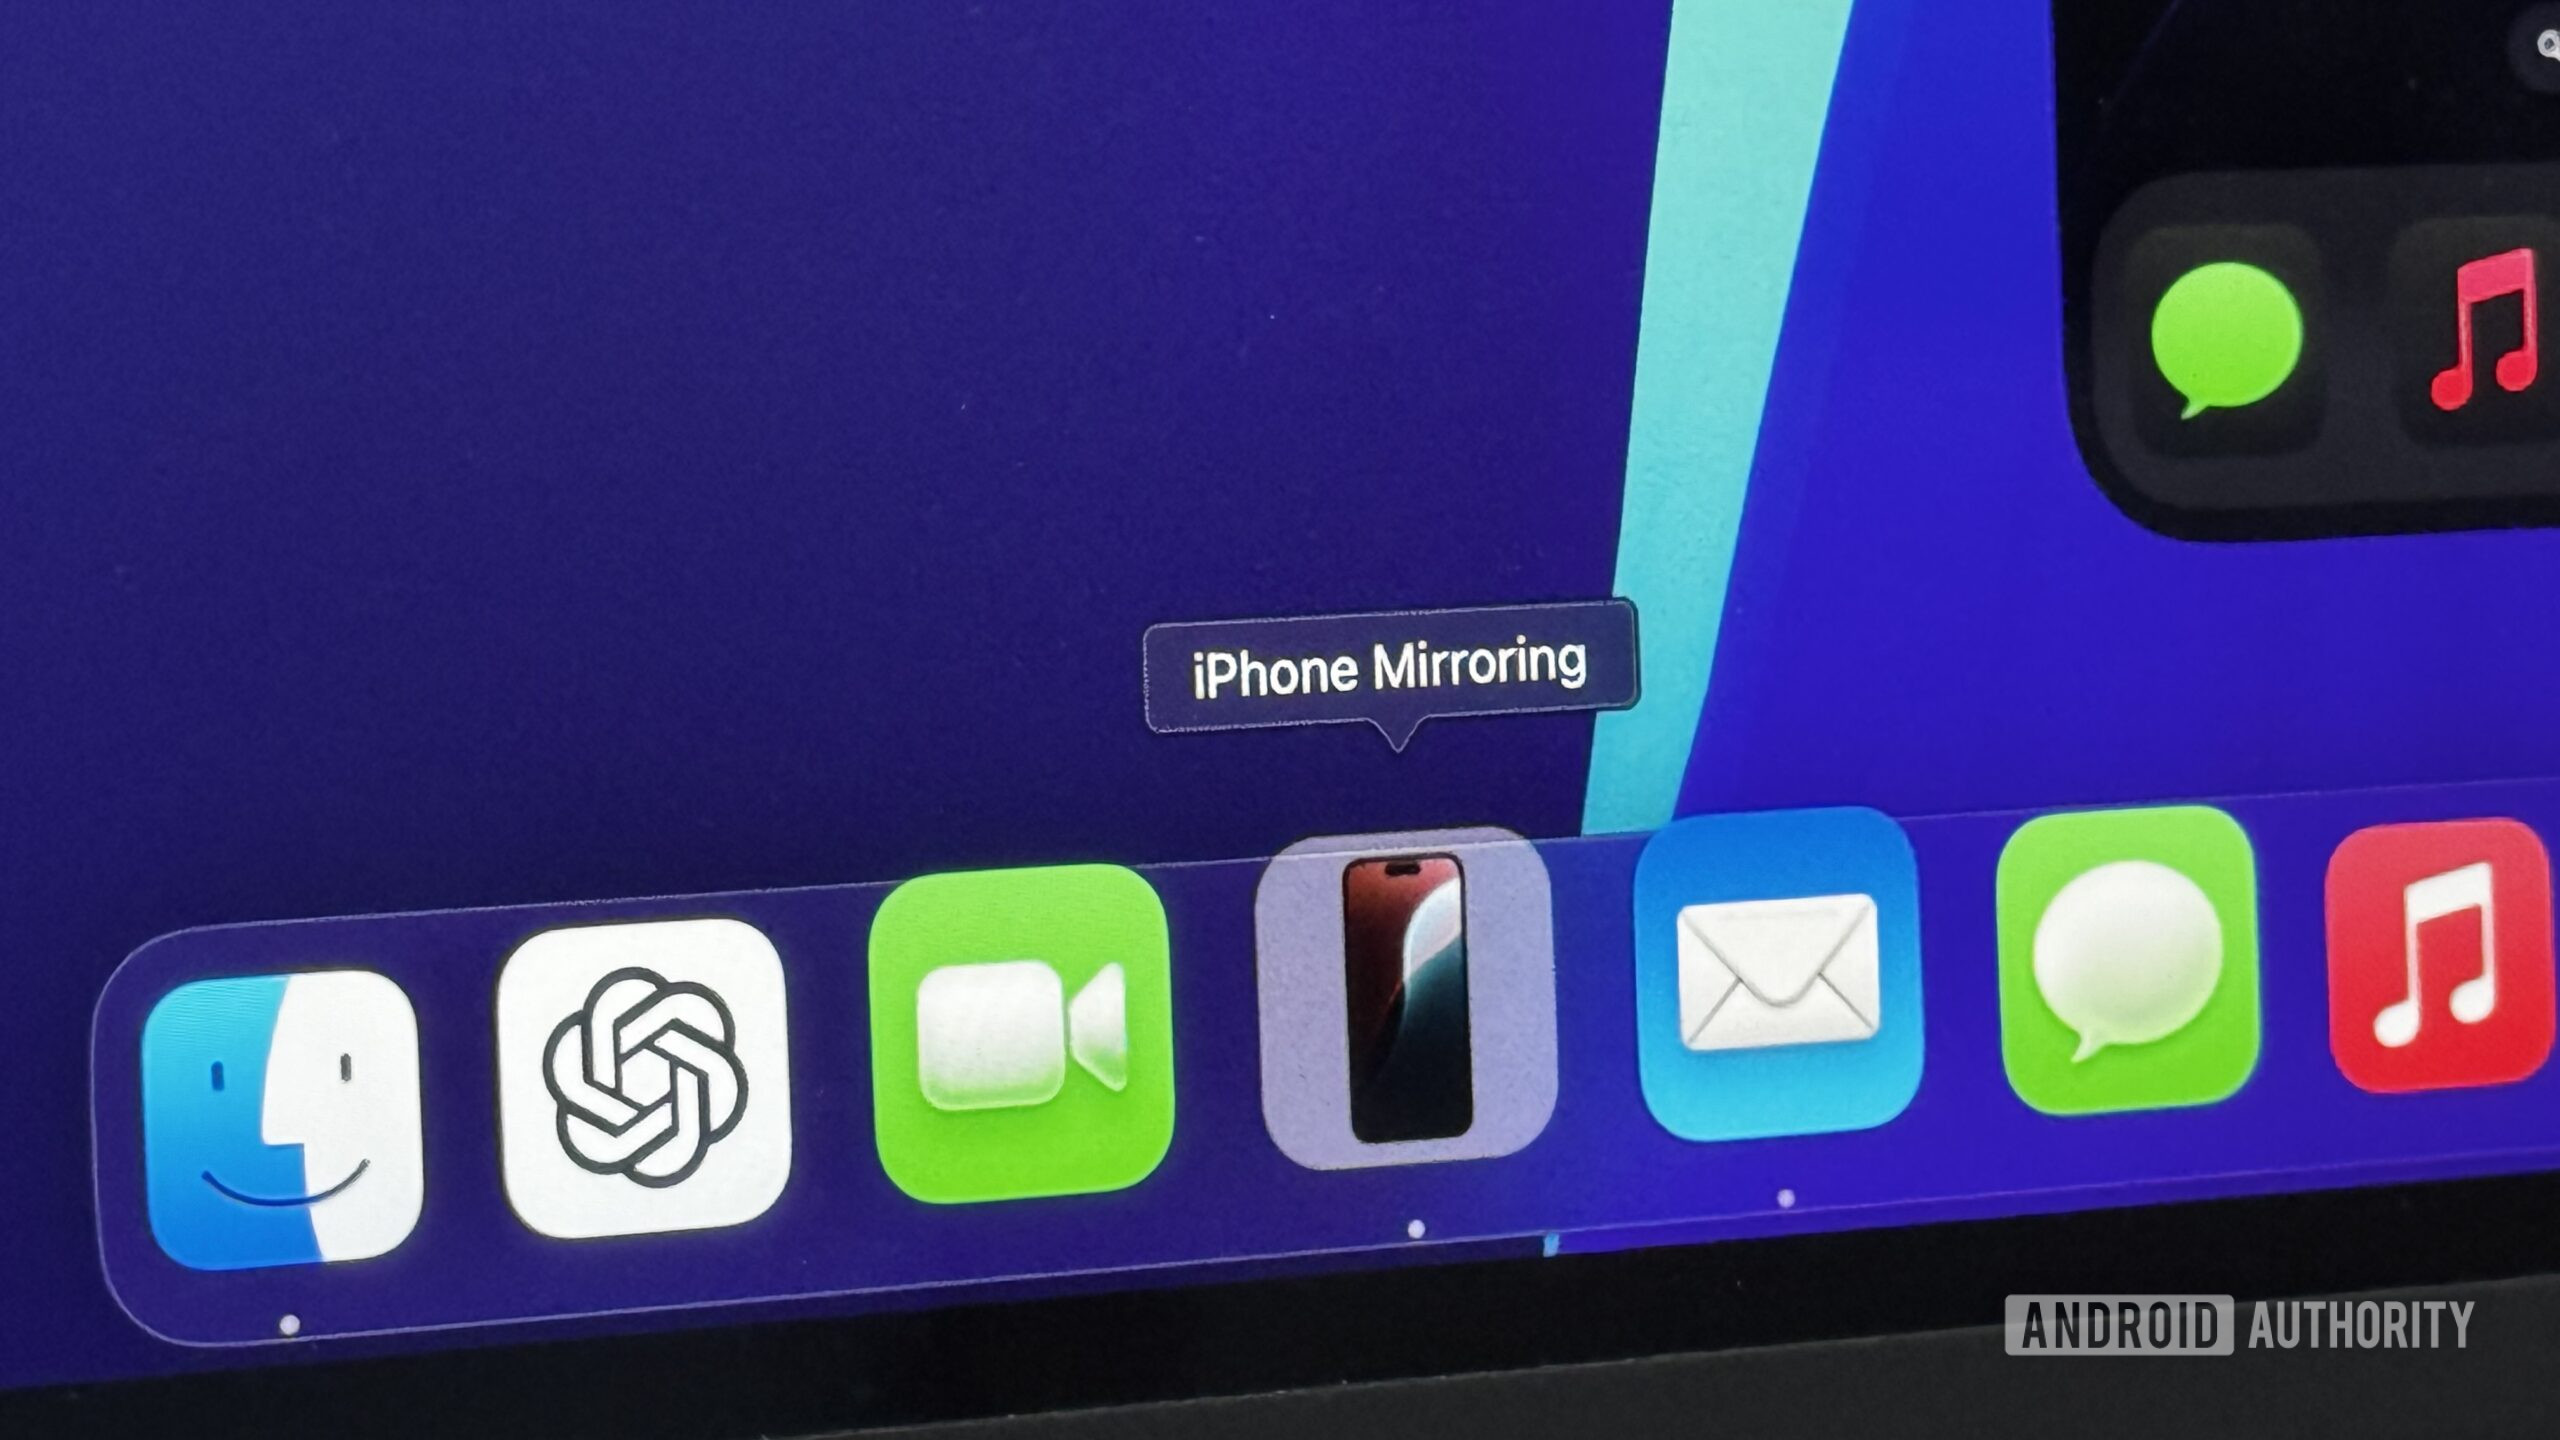 iPhone Mirroring app in macOS Dock